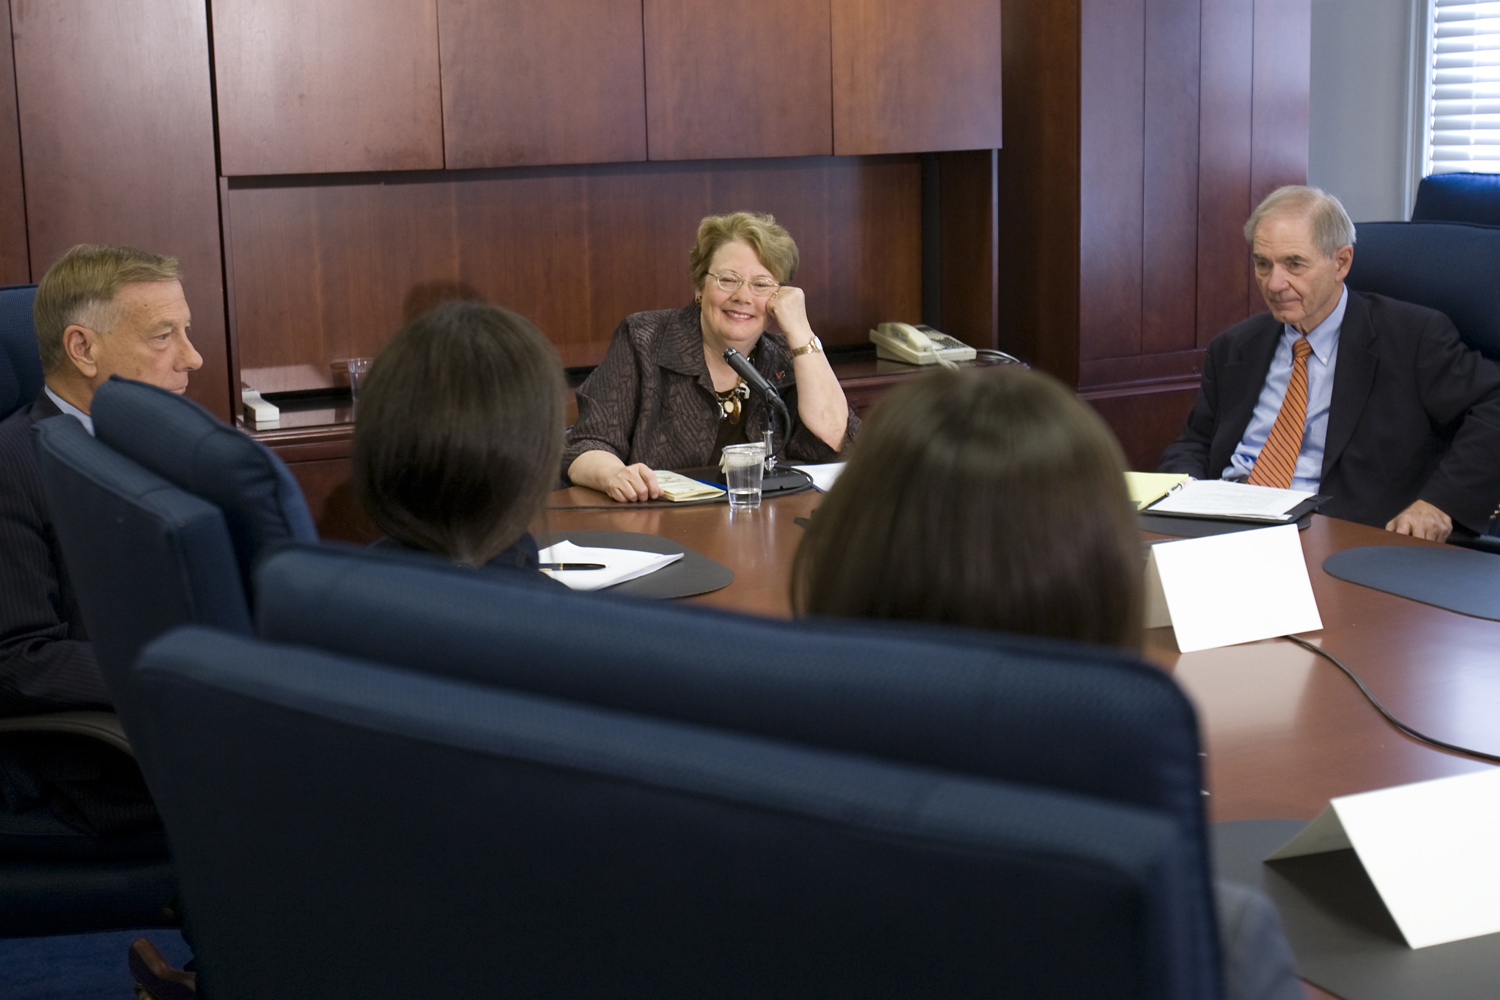 U.Va. President Teresa Sullivan sits at the head of a table at press conference